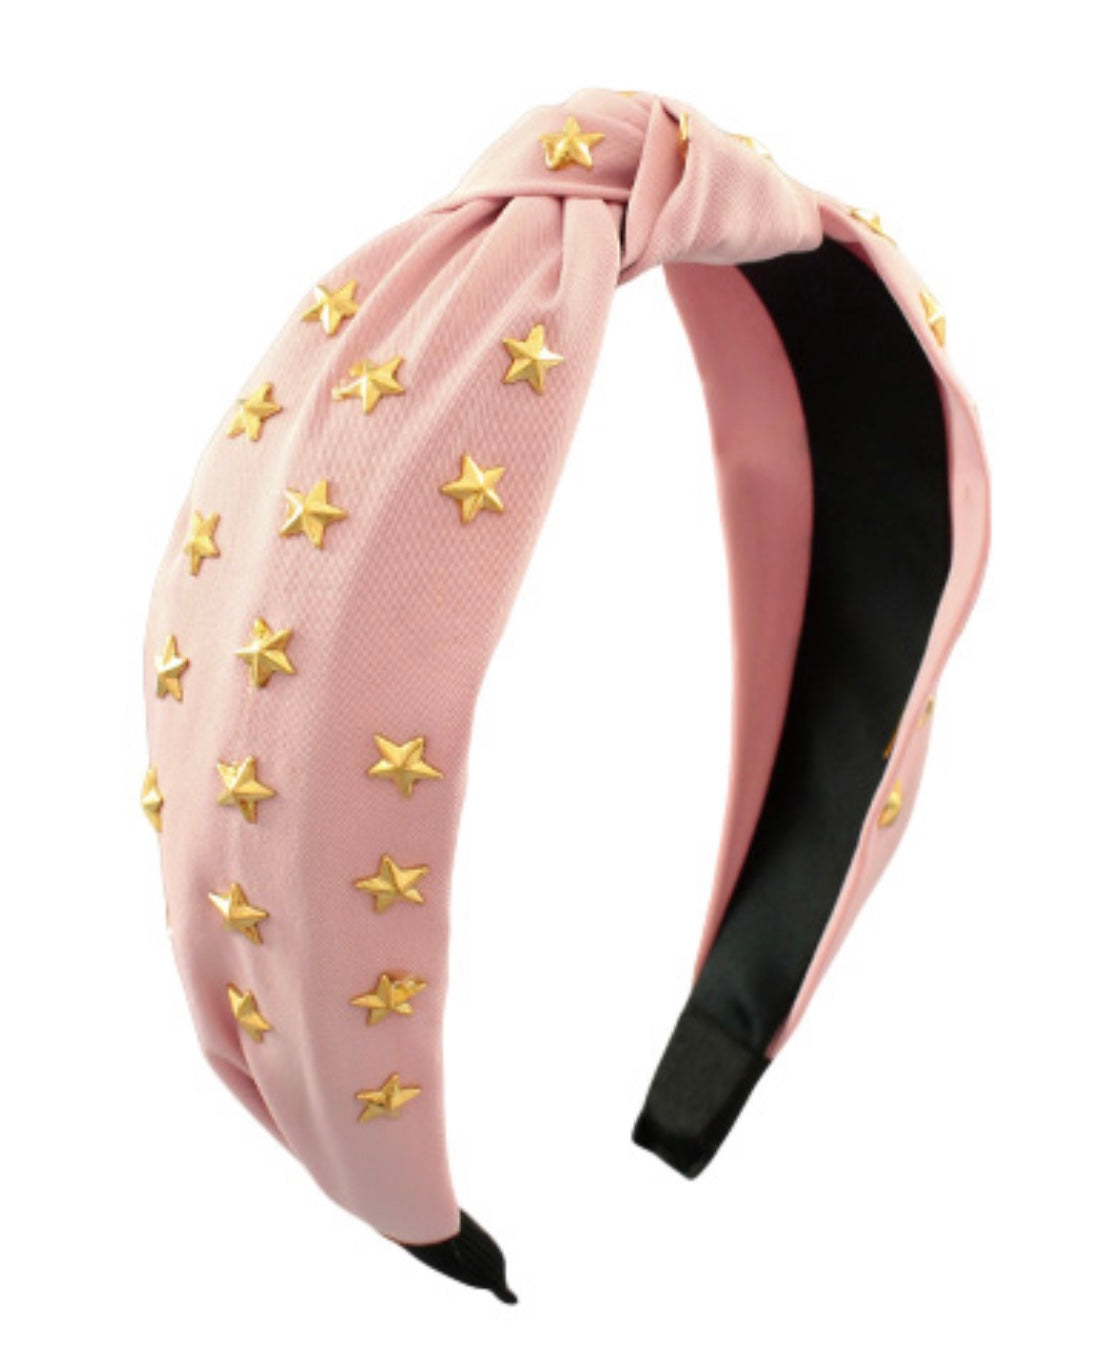 Star Studded Knotted Headband - Blush